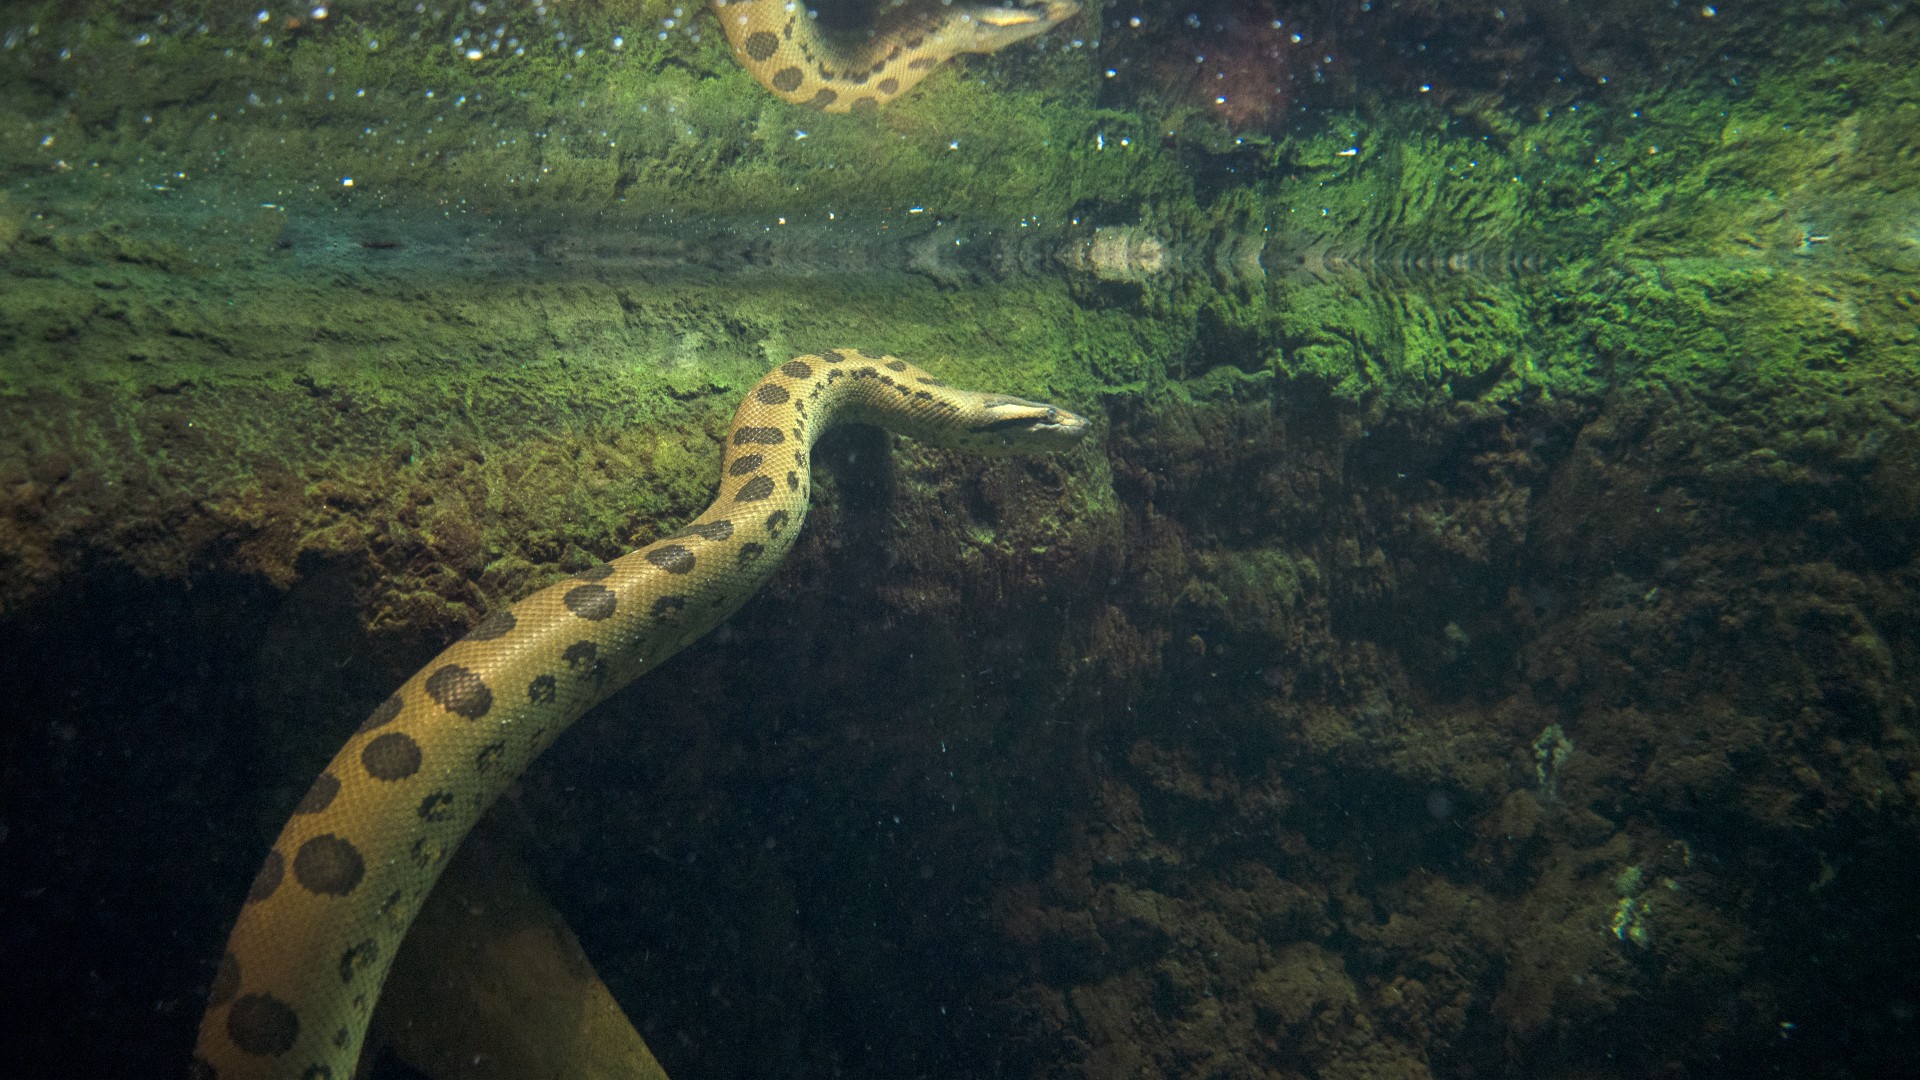 A green Anaconda swimming underwater